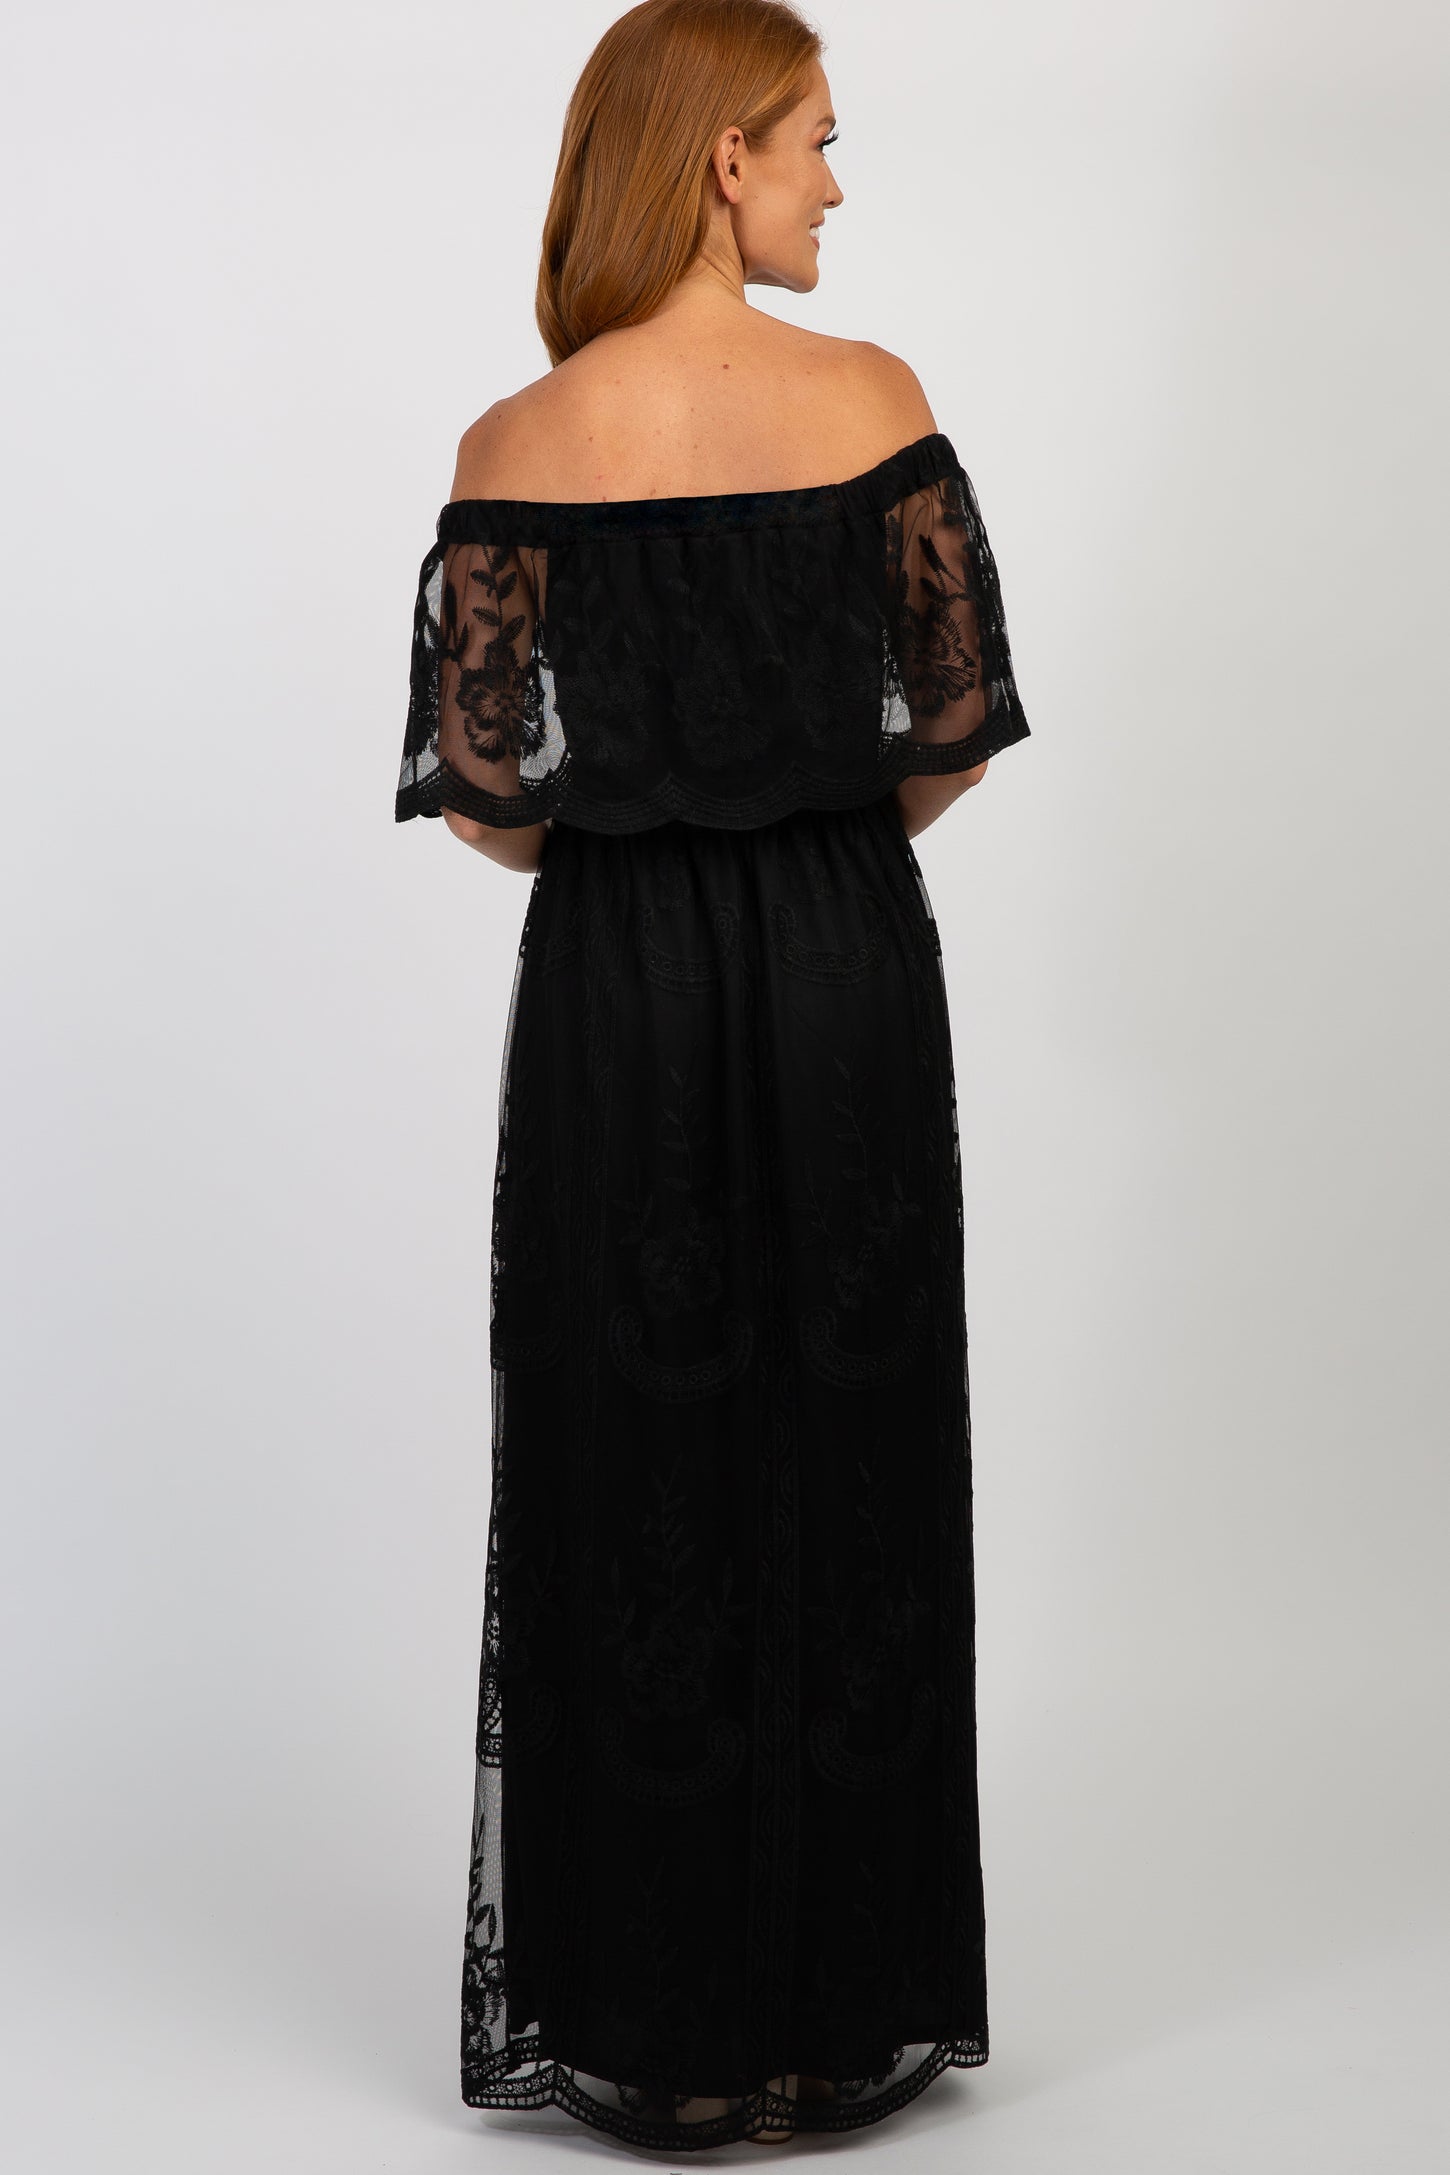 Black Lace Mesh Overlay Off Shoulder Maxi Dress